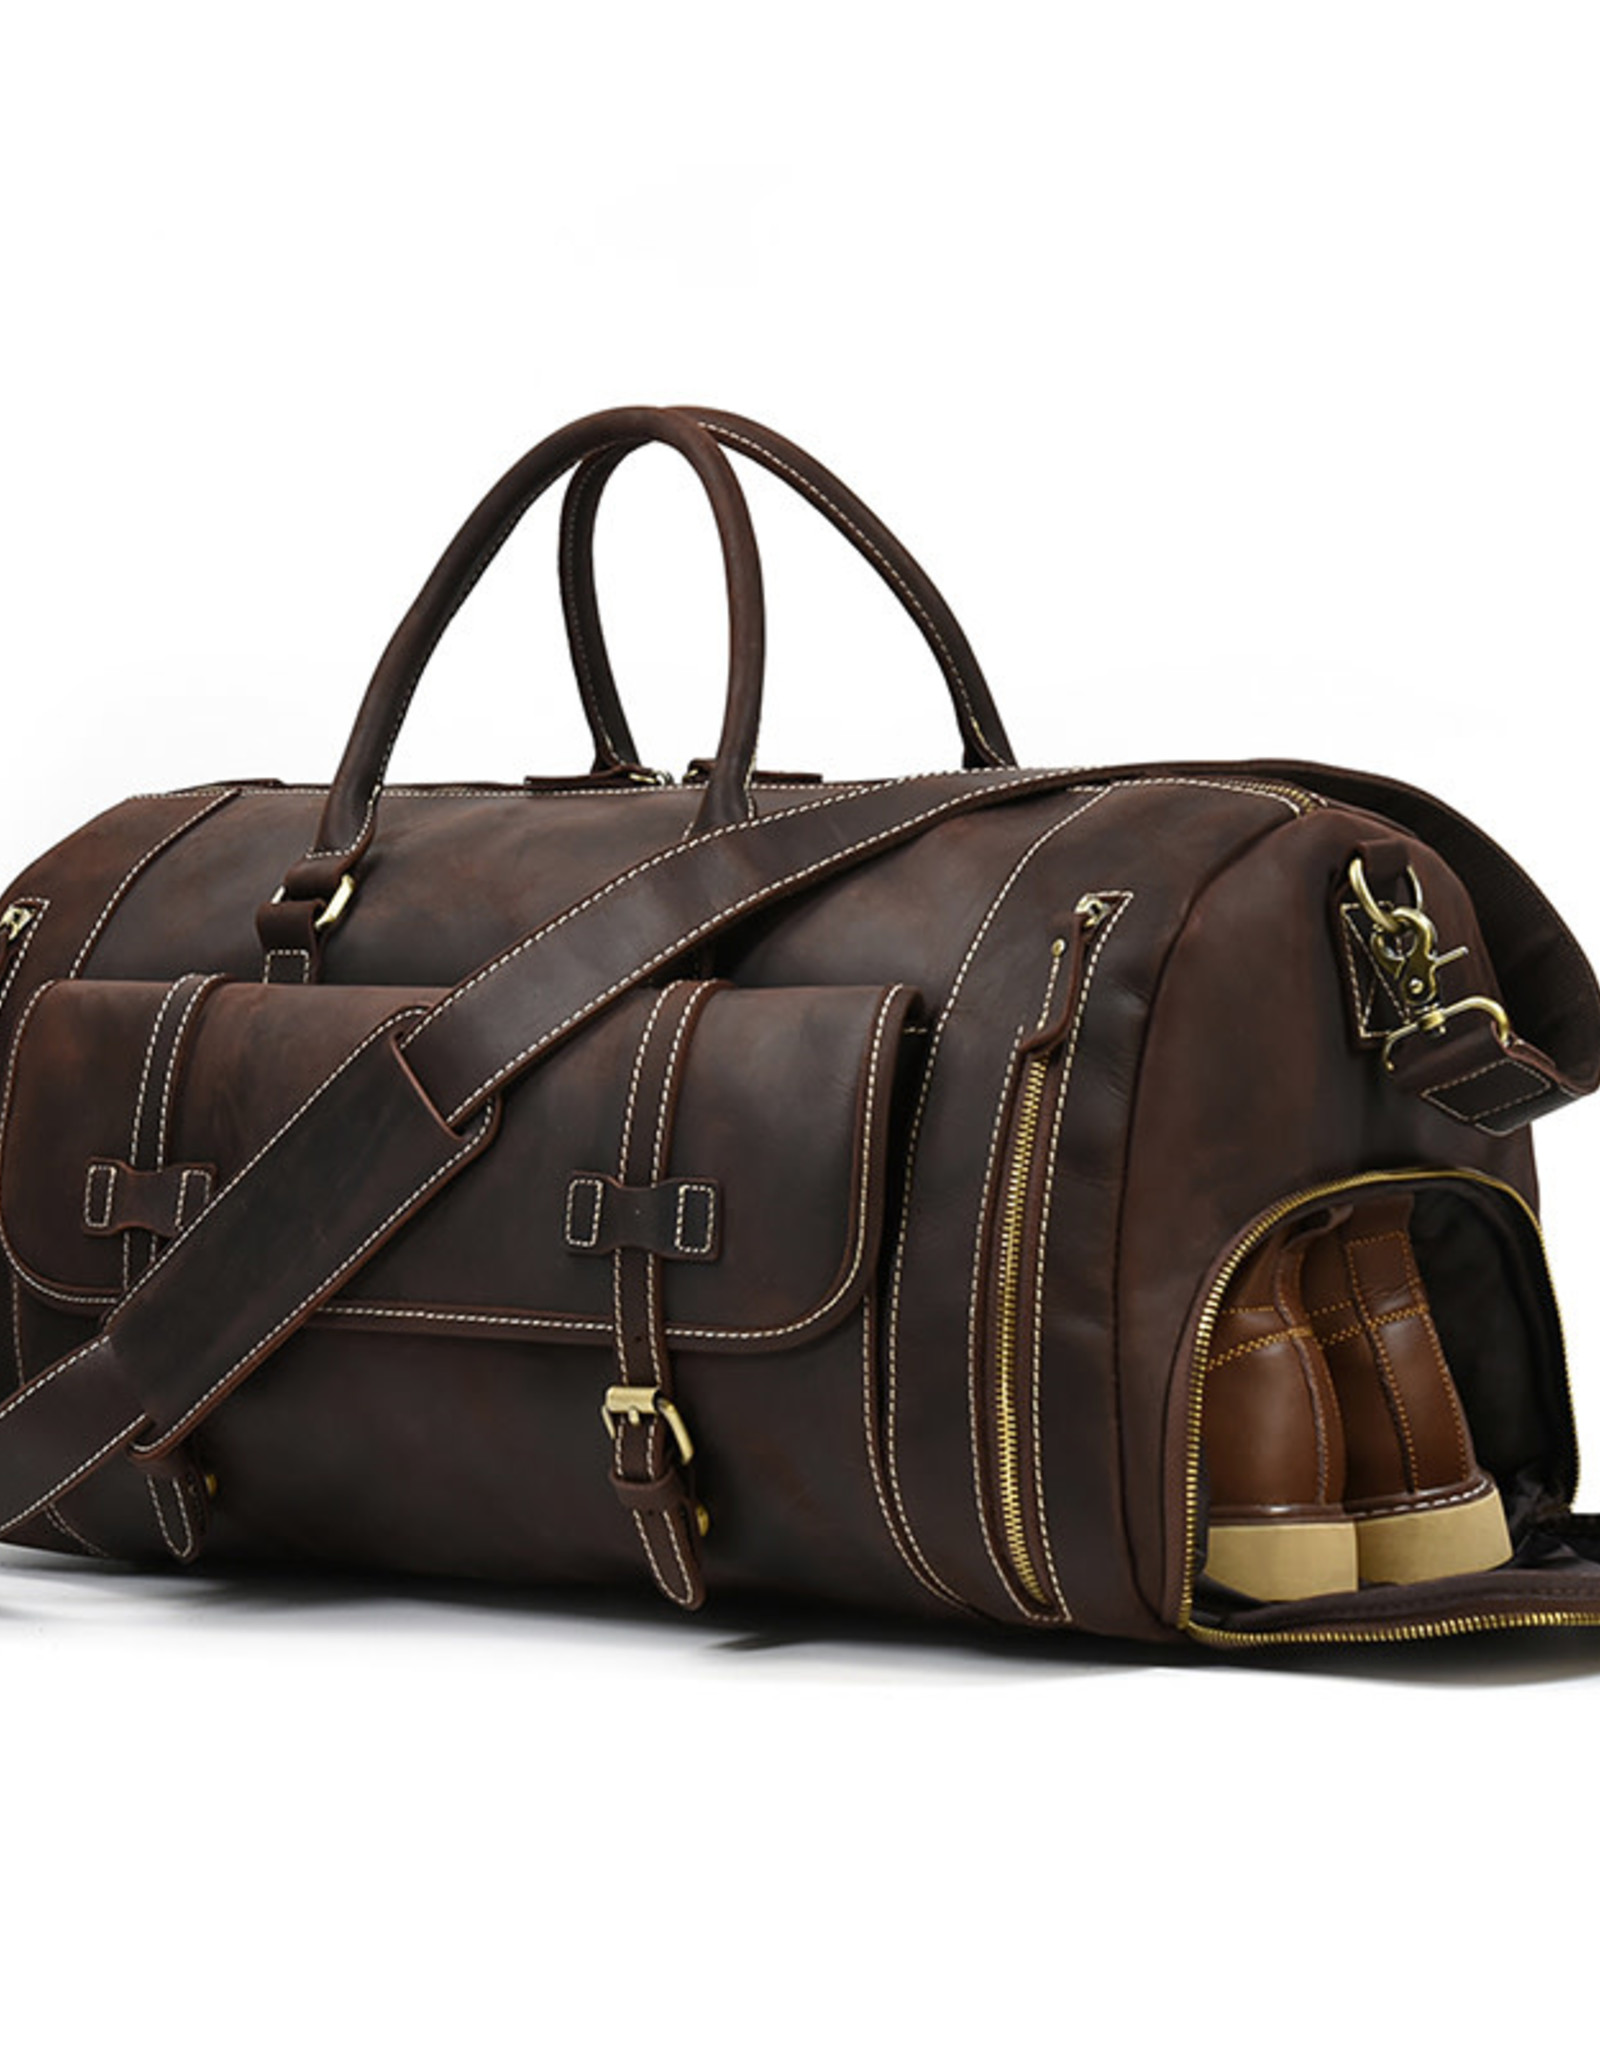 Jonathan Travel Luggage Bag Genuine Leather